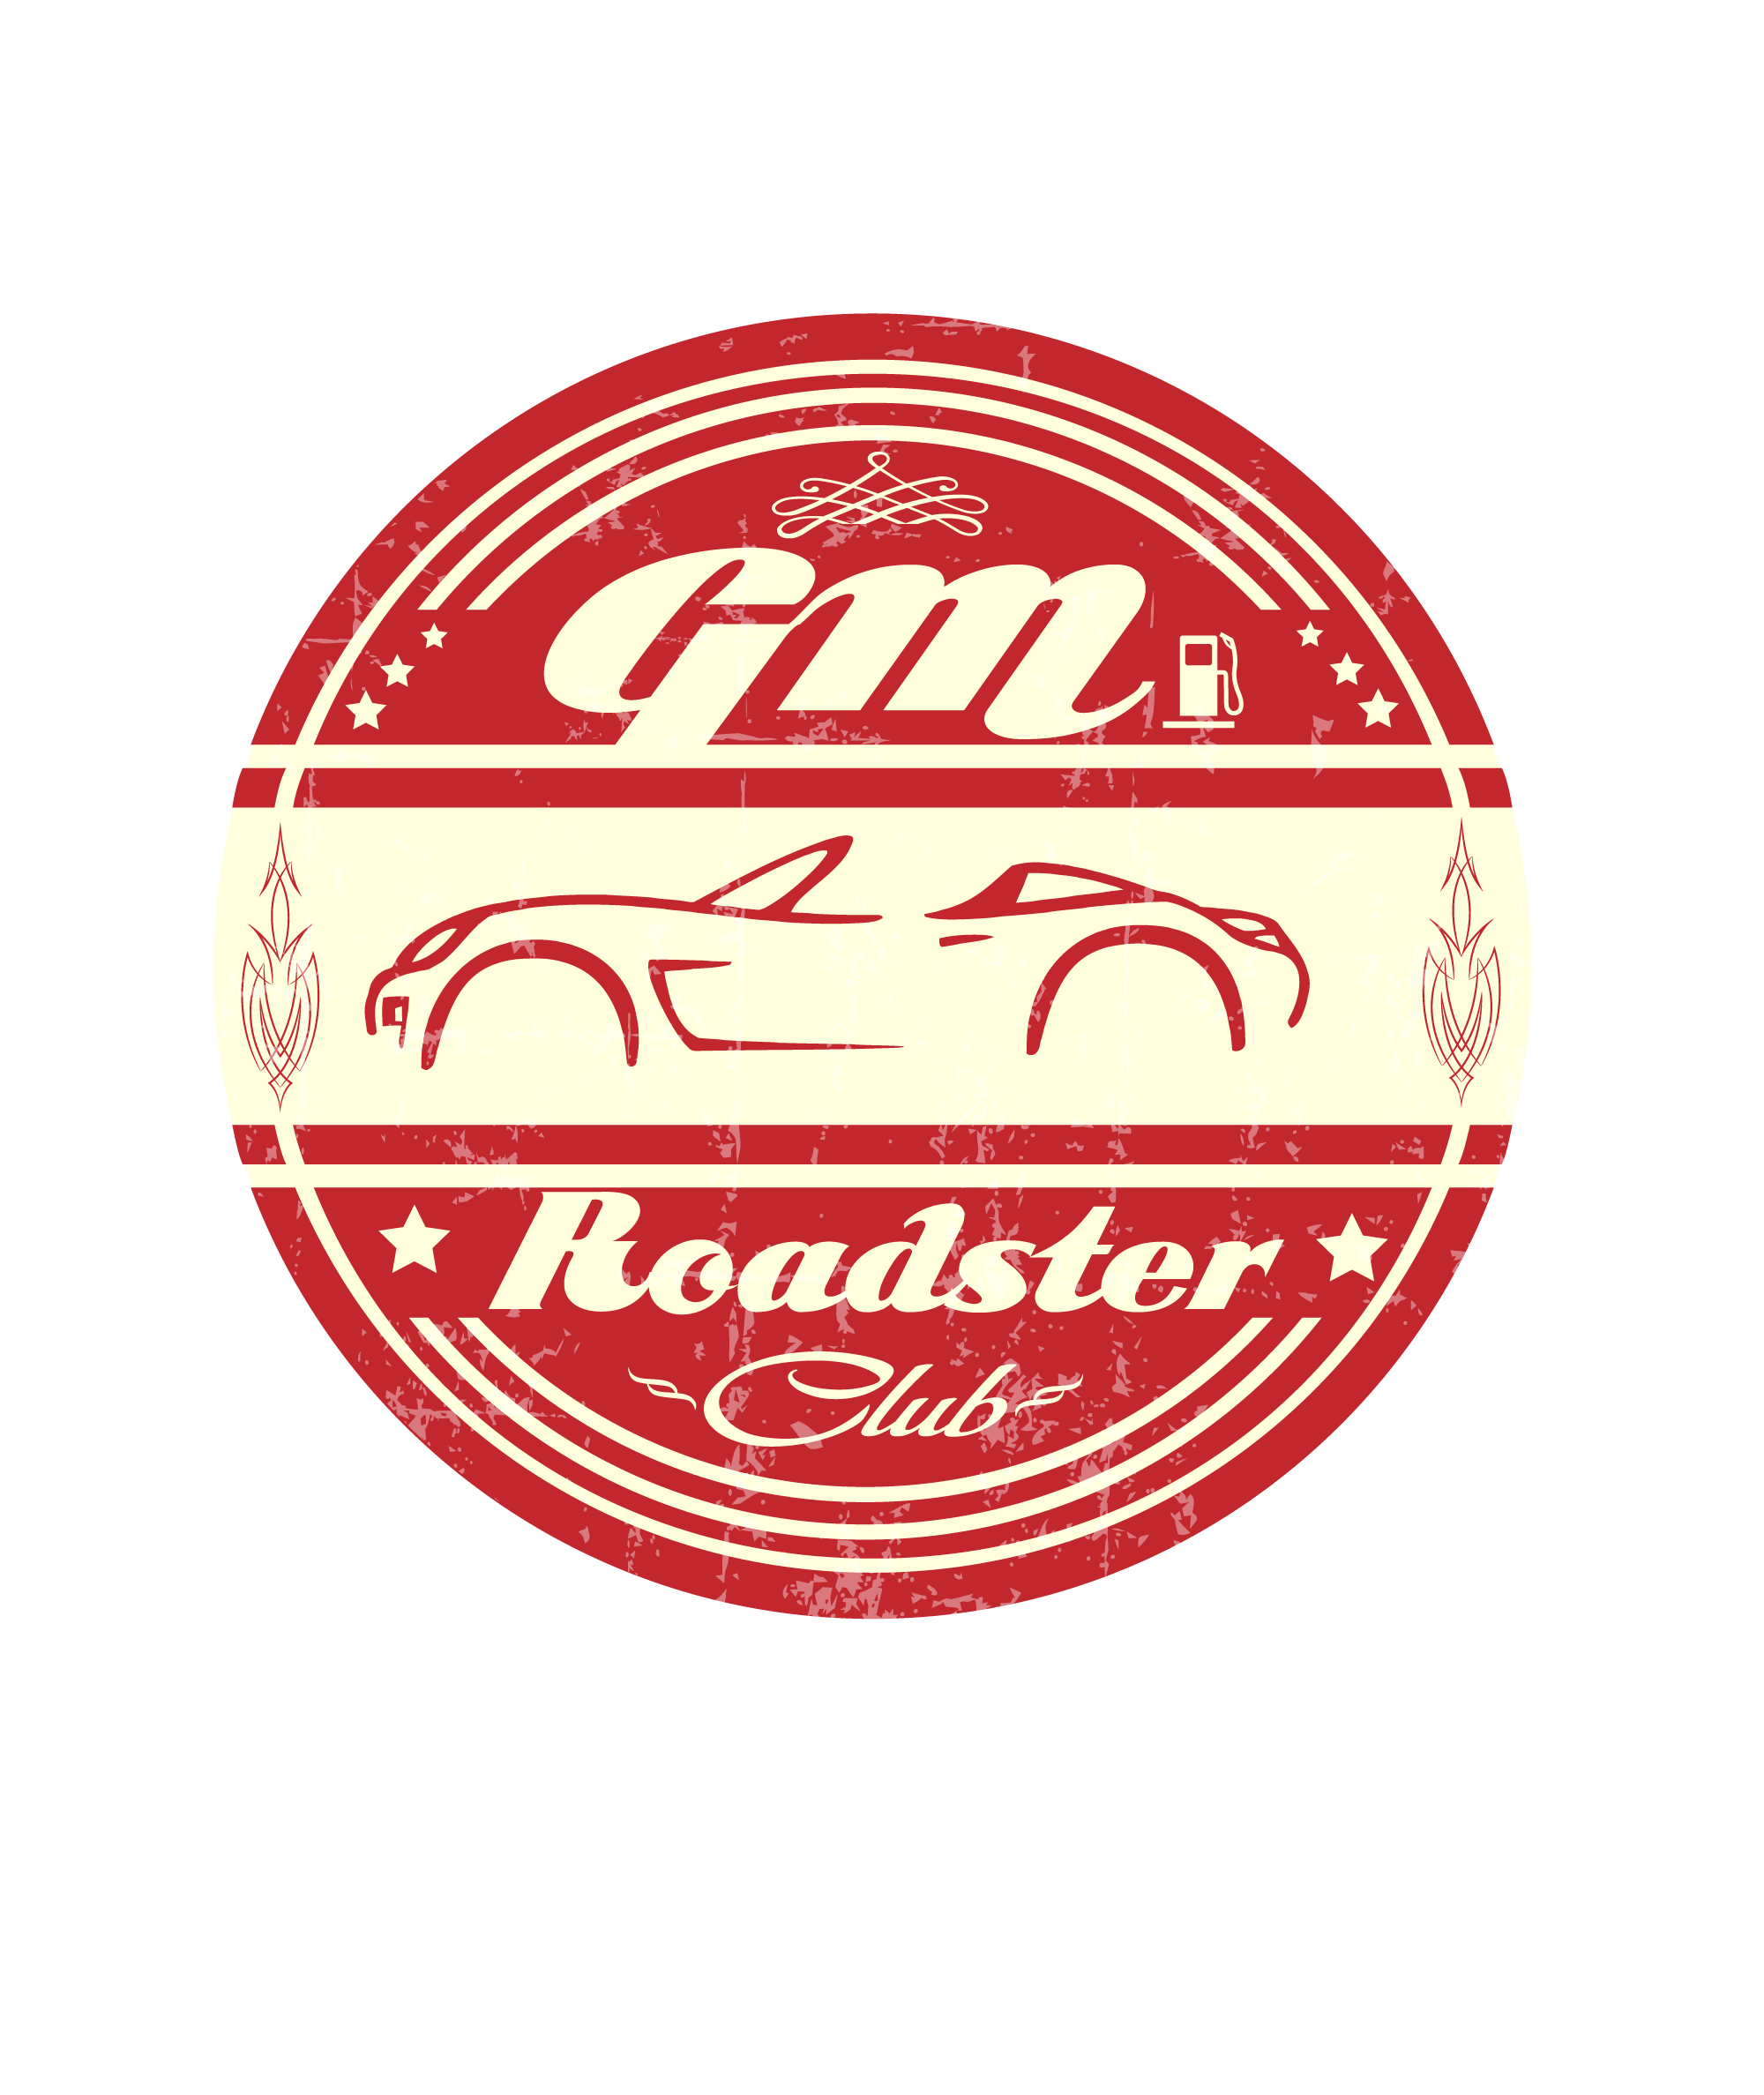 gm-roadster-club-print-high-quality